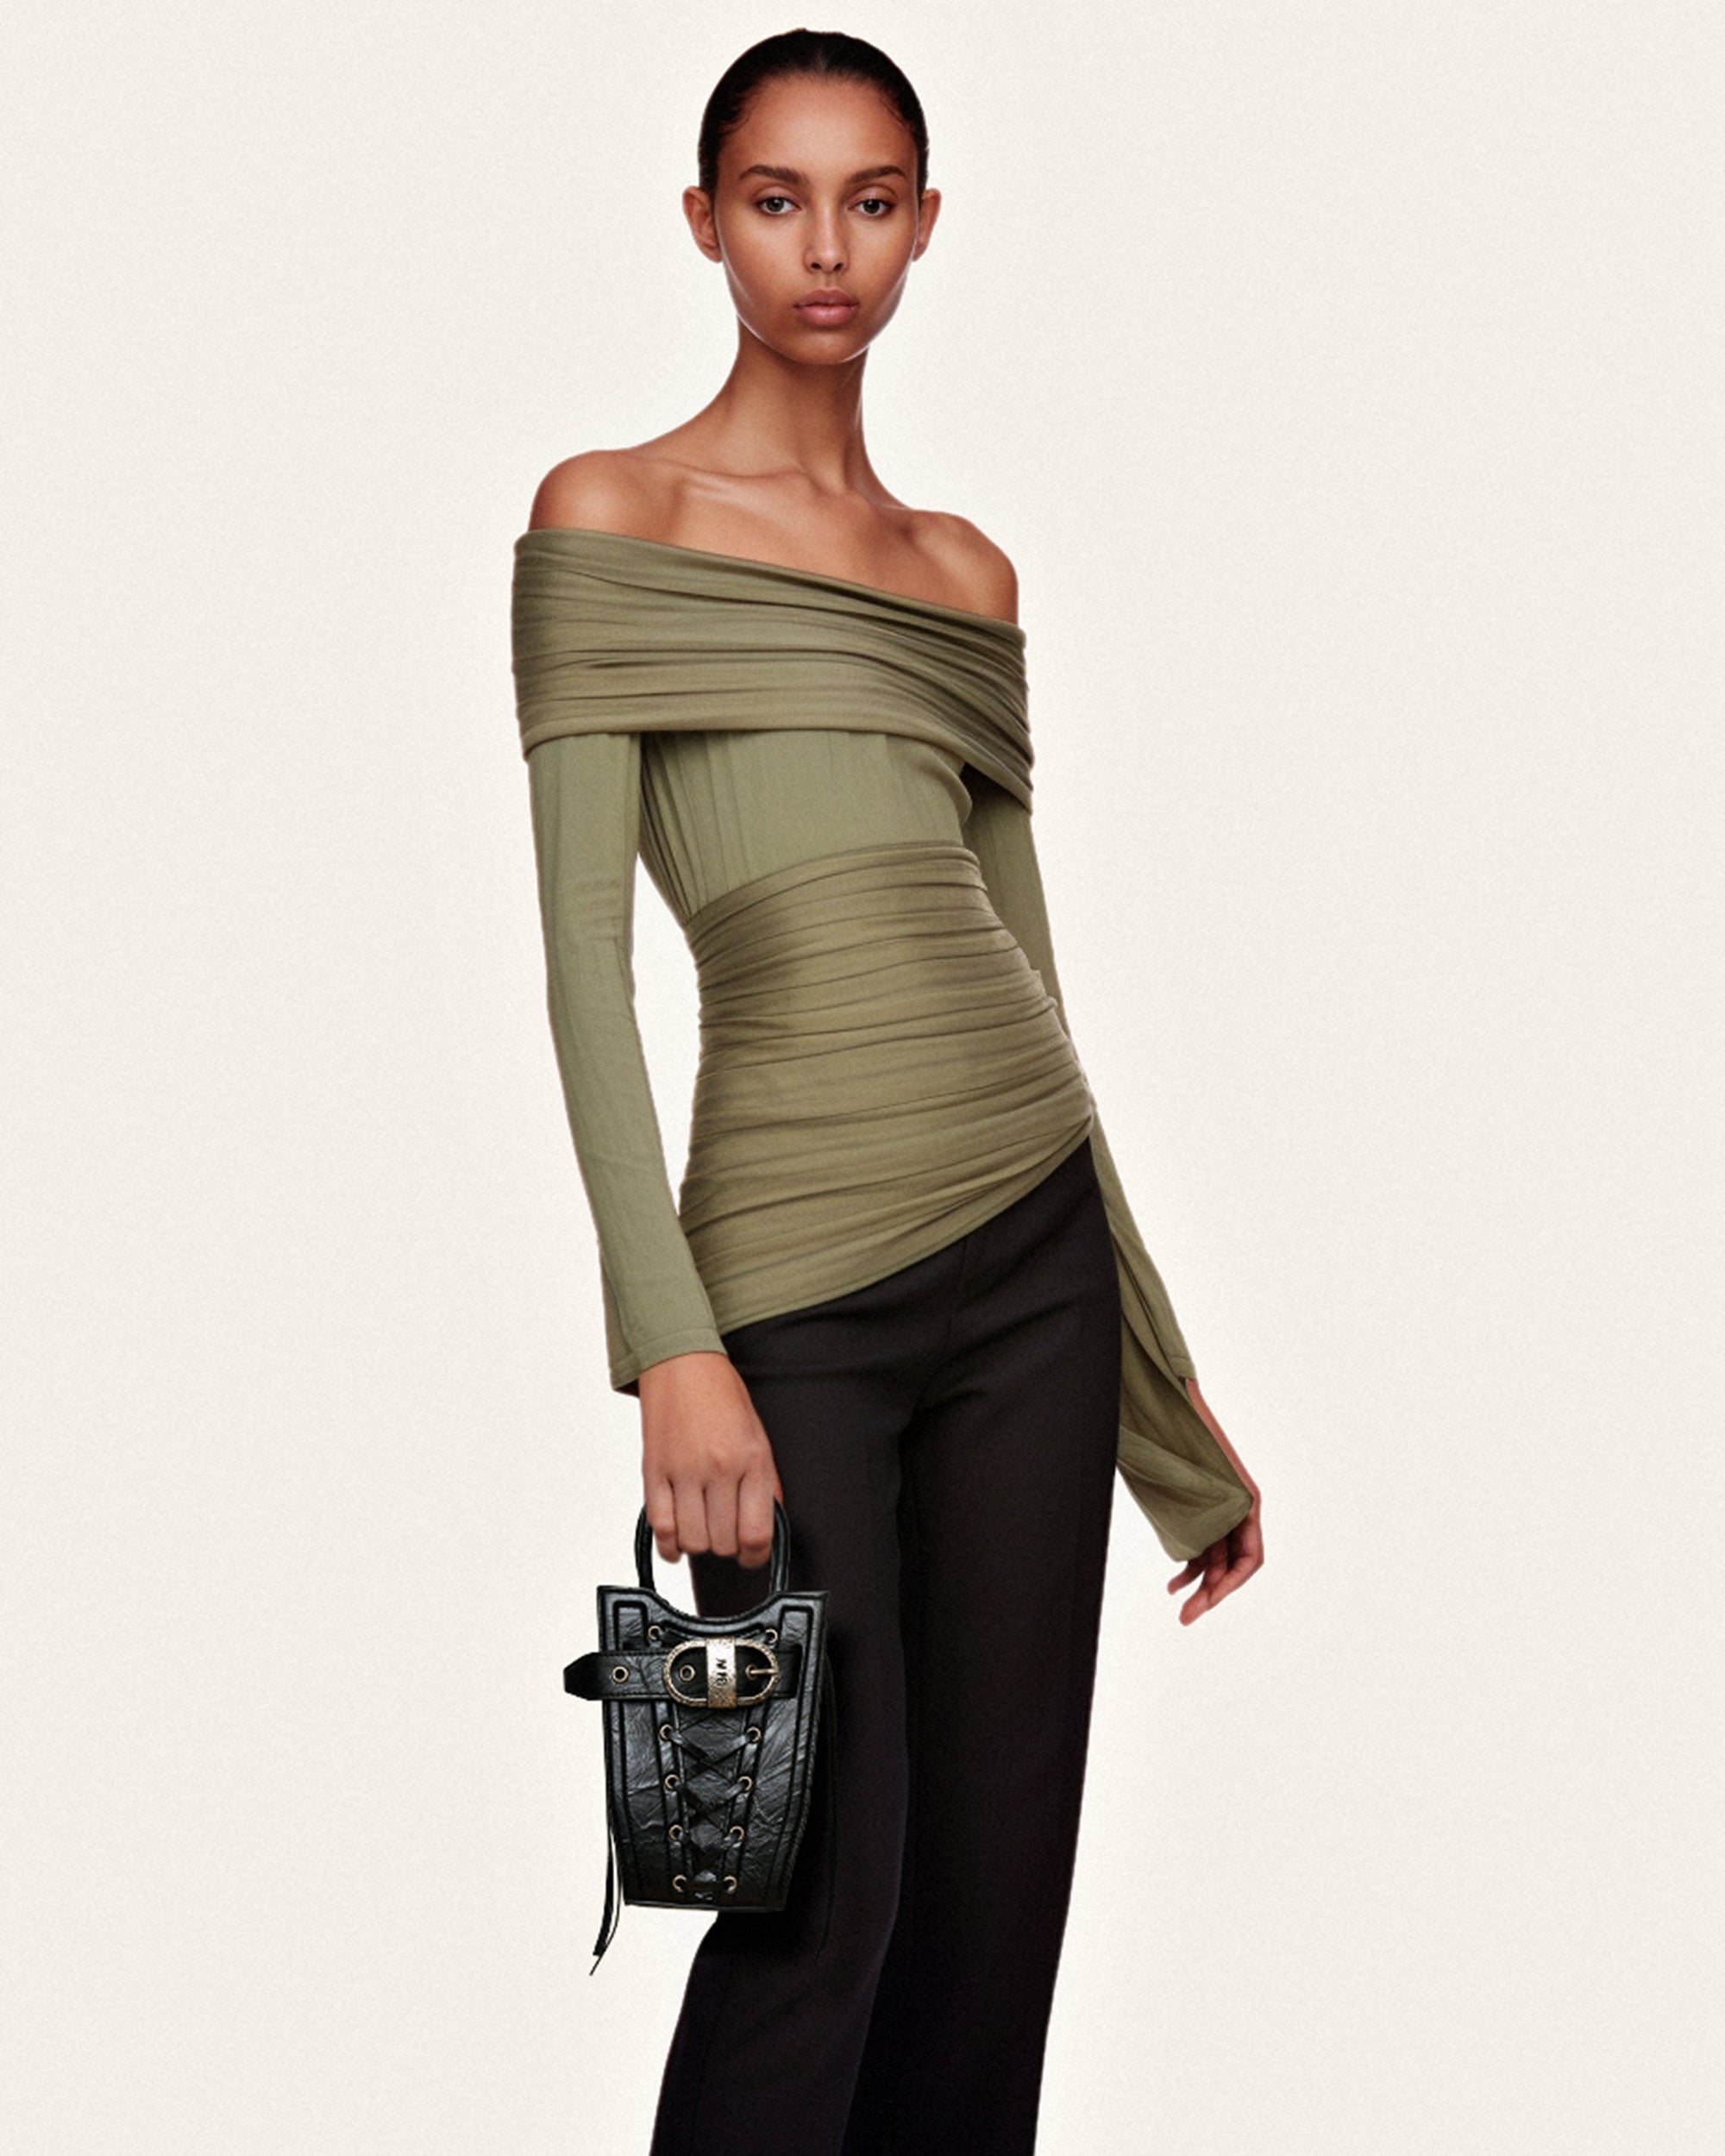 FEI Checkerboard Mini Tote Bag - Black & White - Fashion Women Vegan Bag Online Shopping - JW Pei